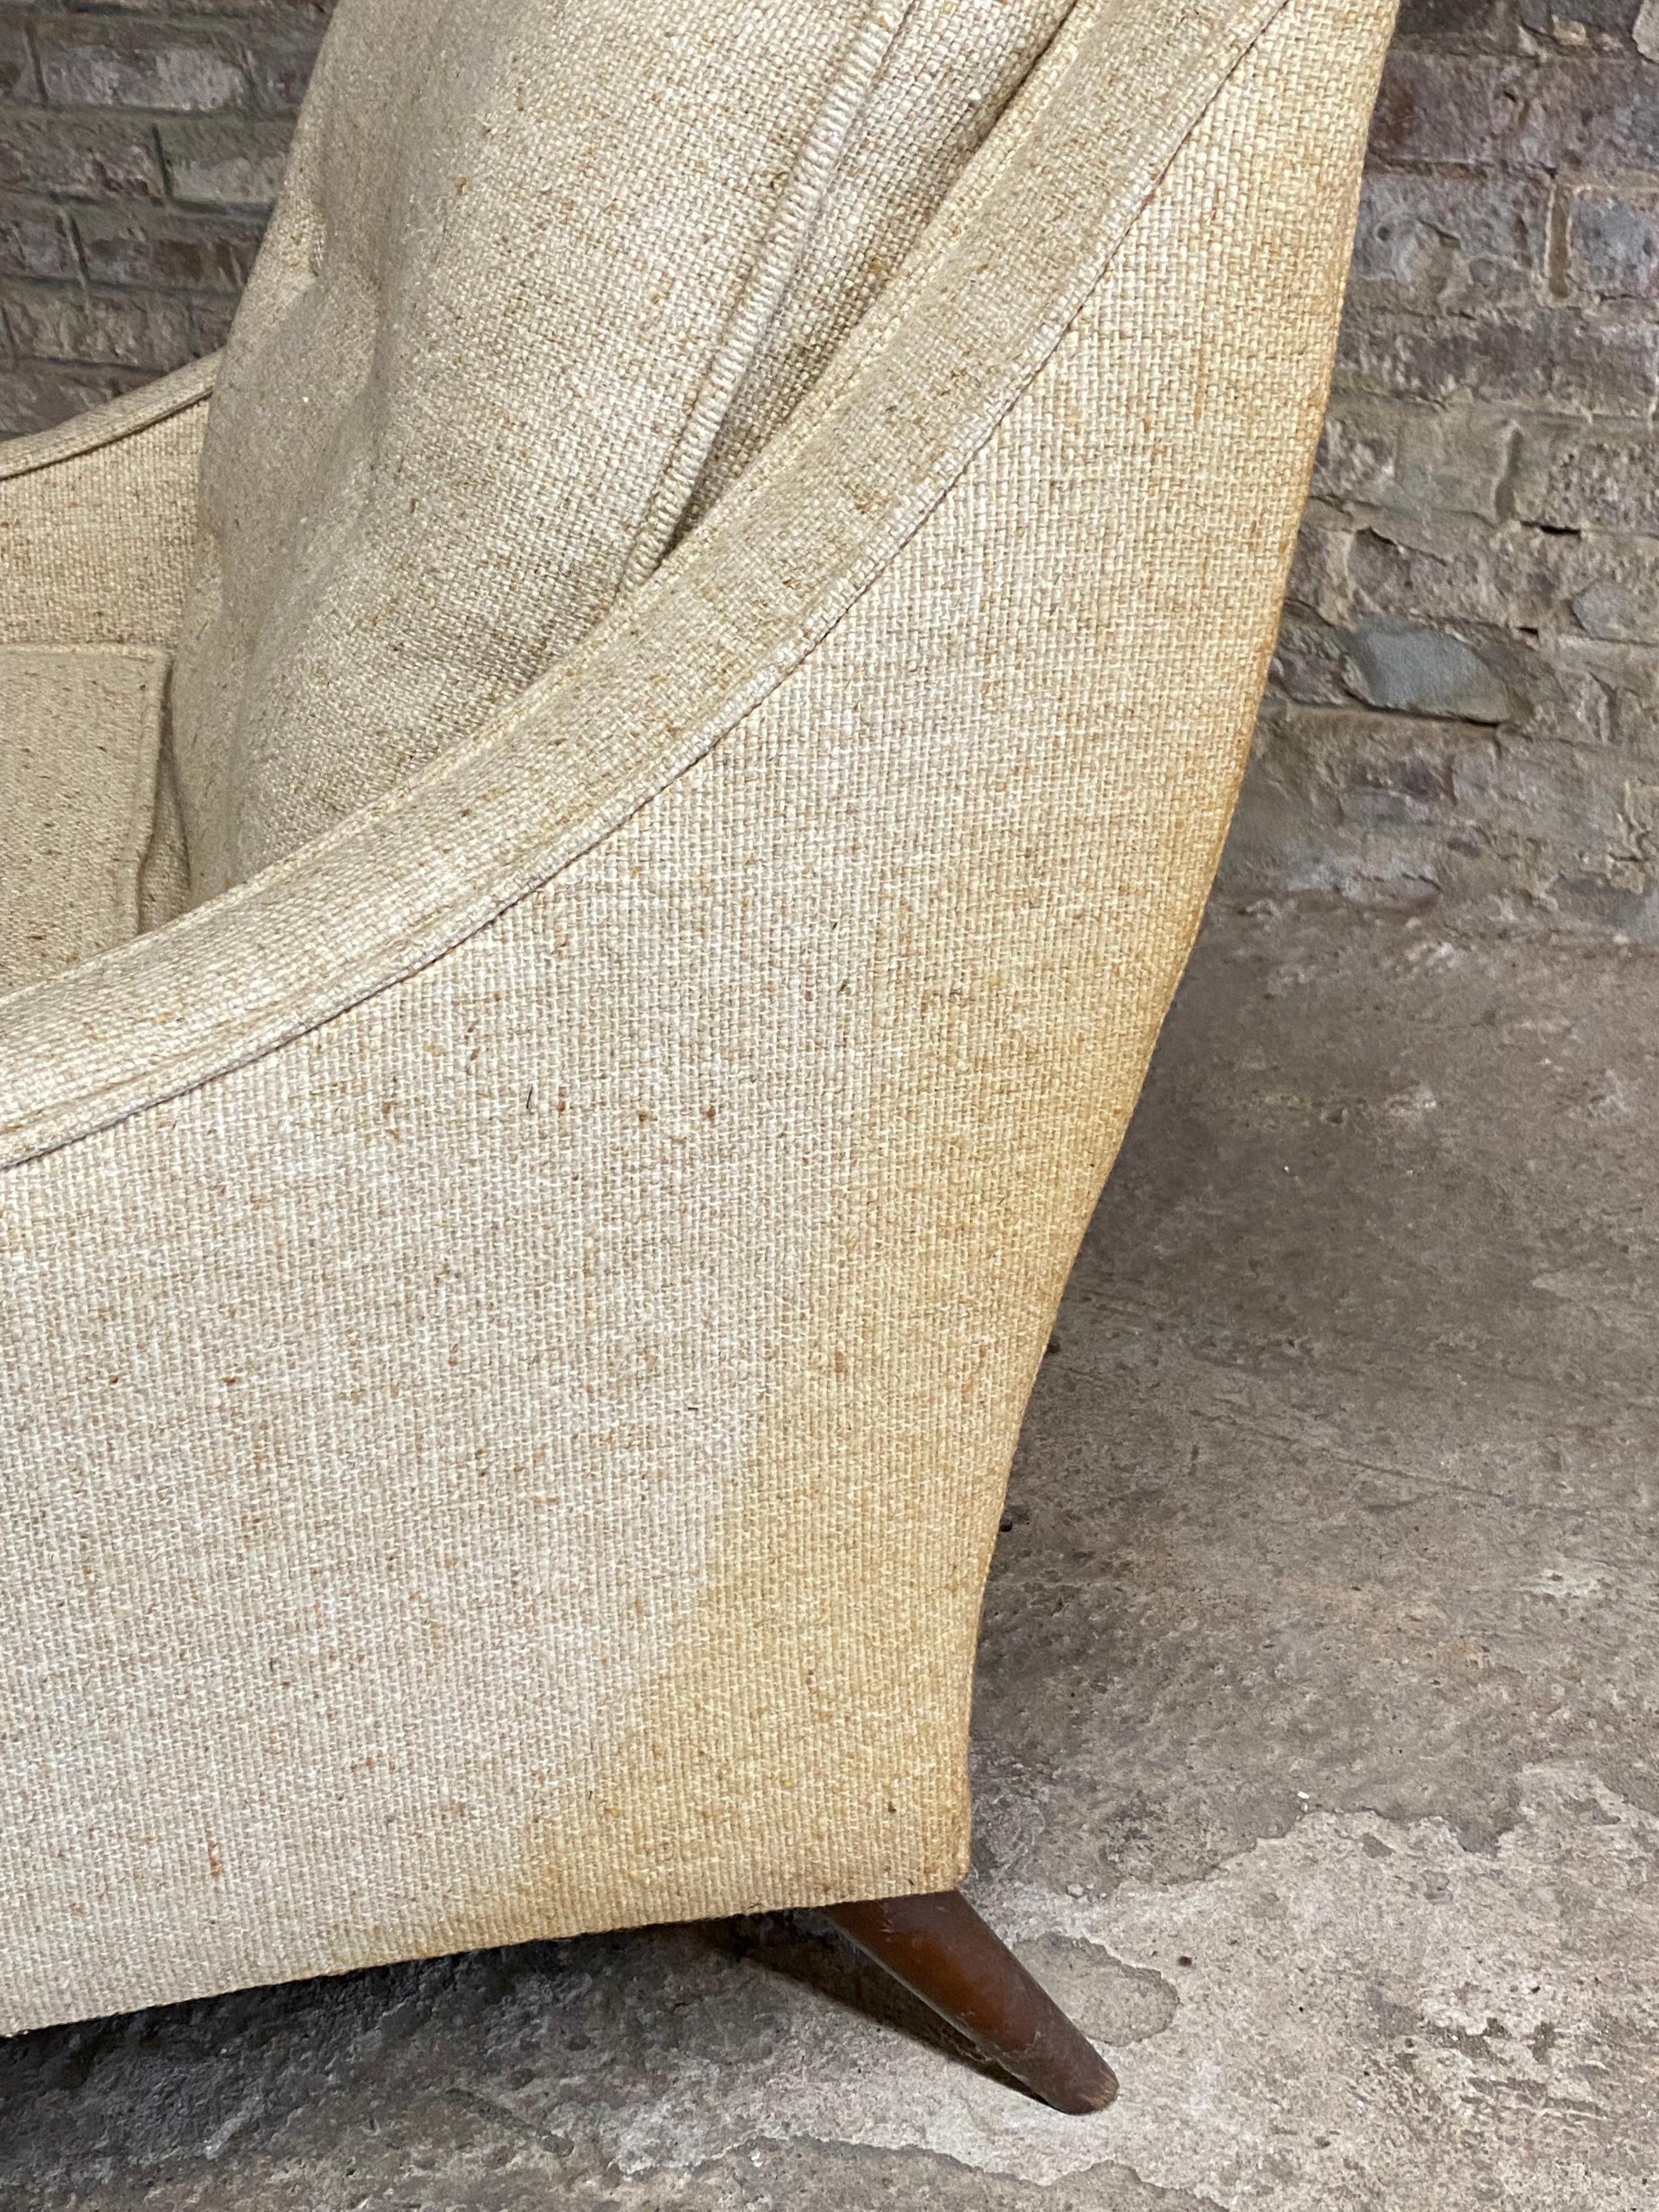 Mid-Century Modern Low Arm Slipper Chair Manner of Milo Baughman for James 8